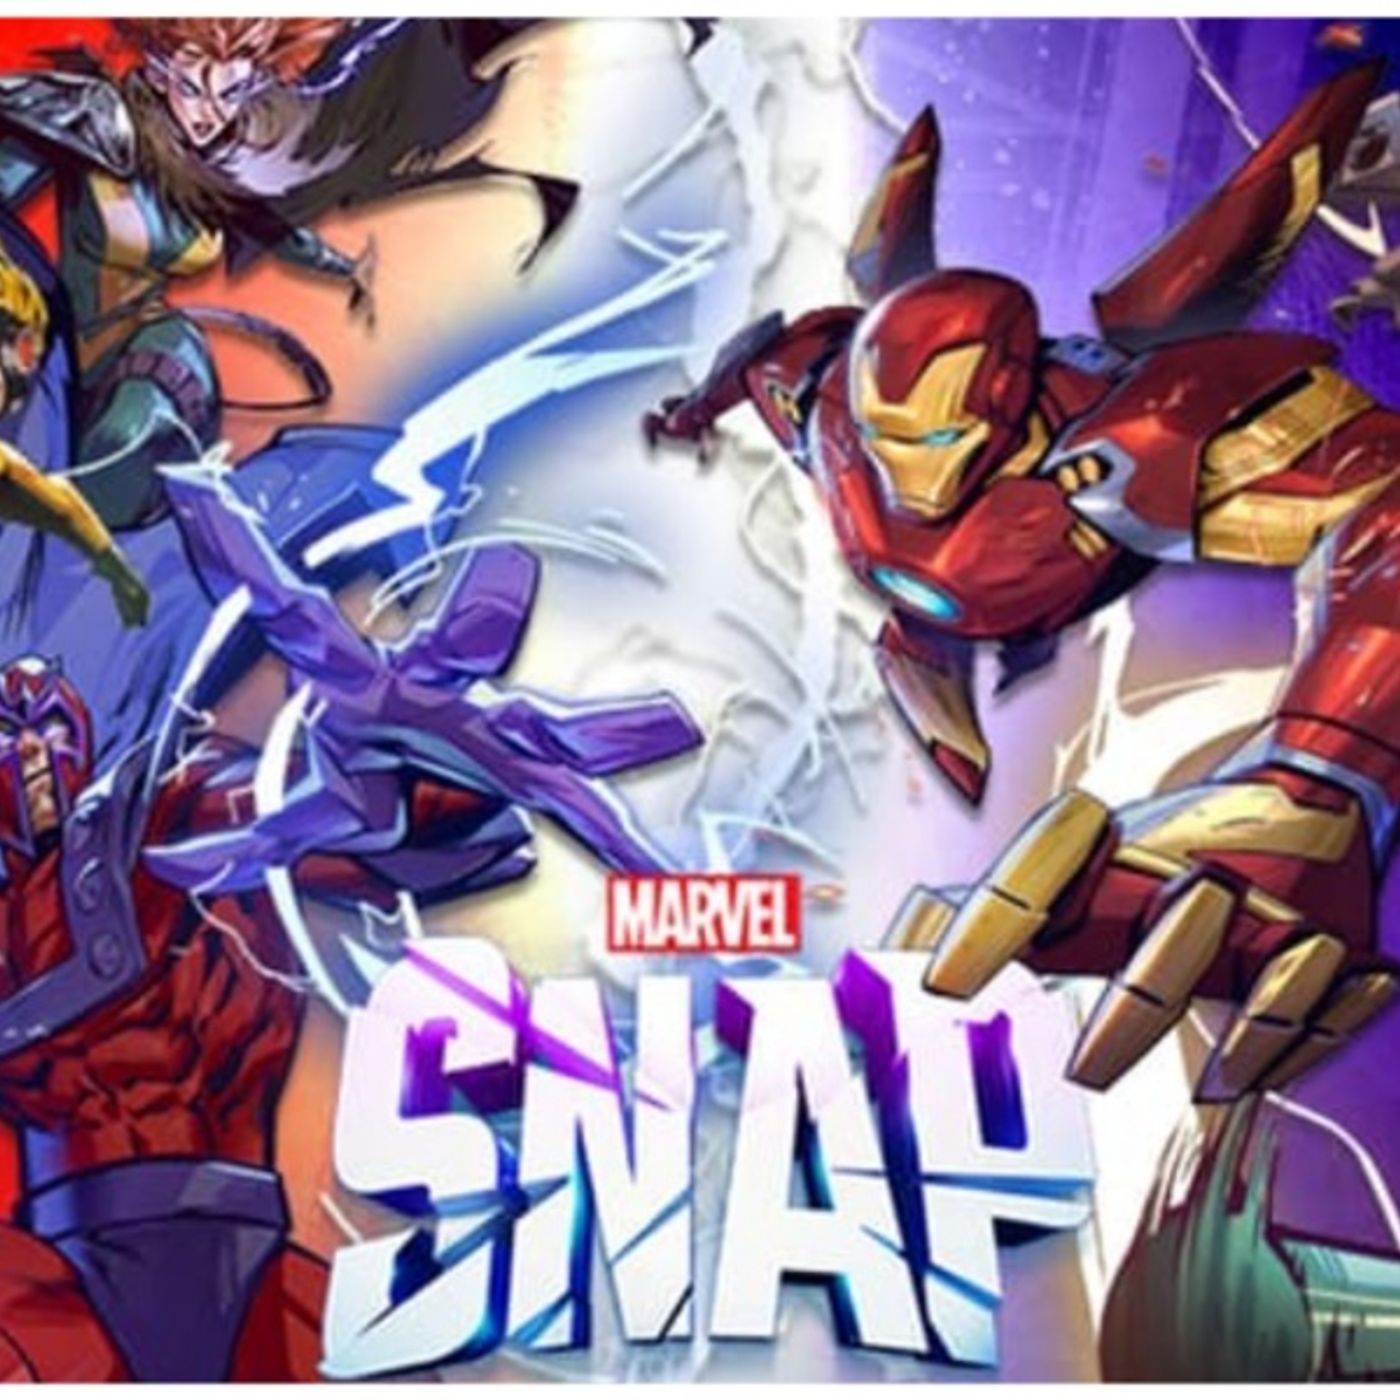 SNAP Material - ”Avengers vs. X-Men” Review